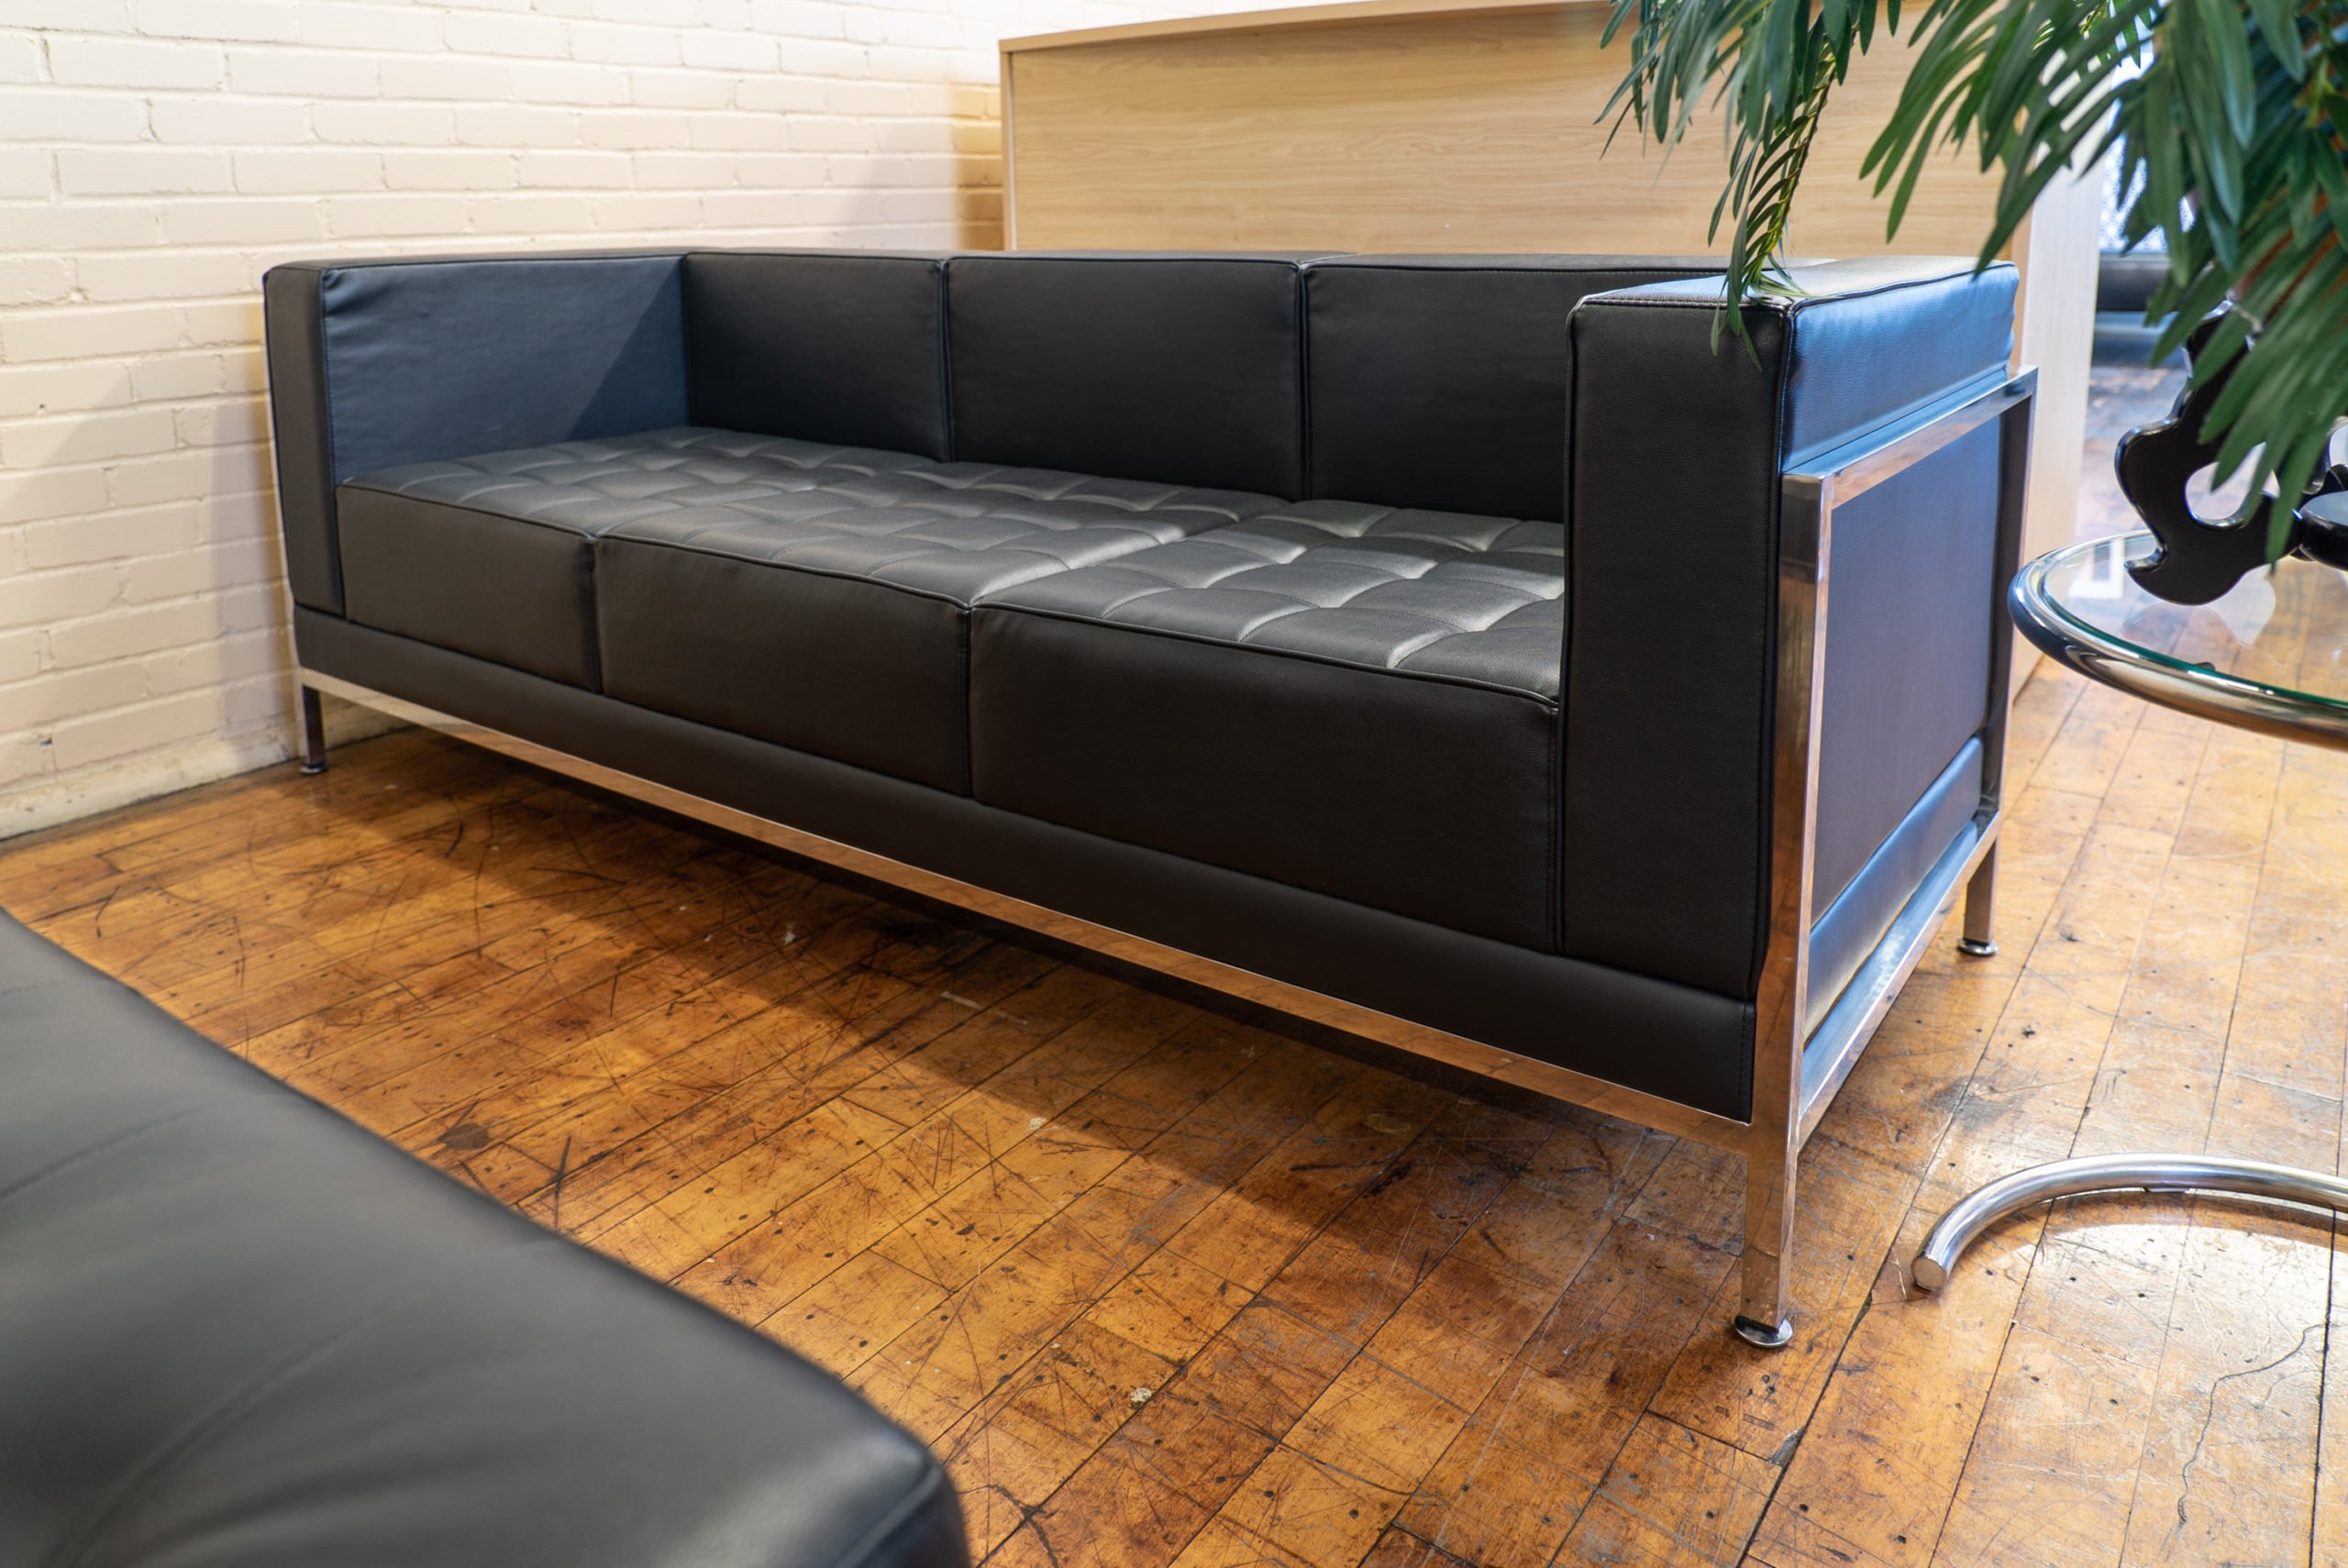 black leather sofa for sale leeds